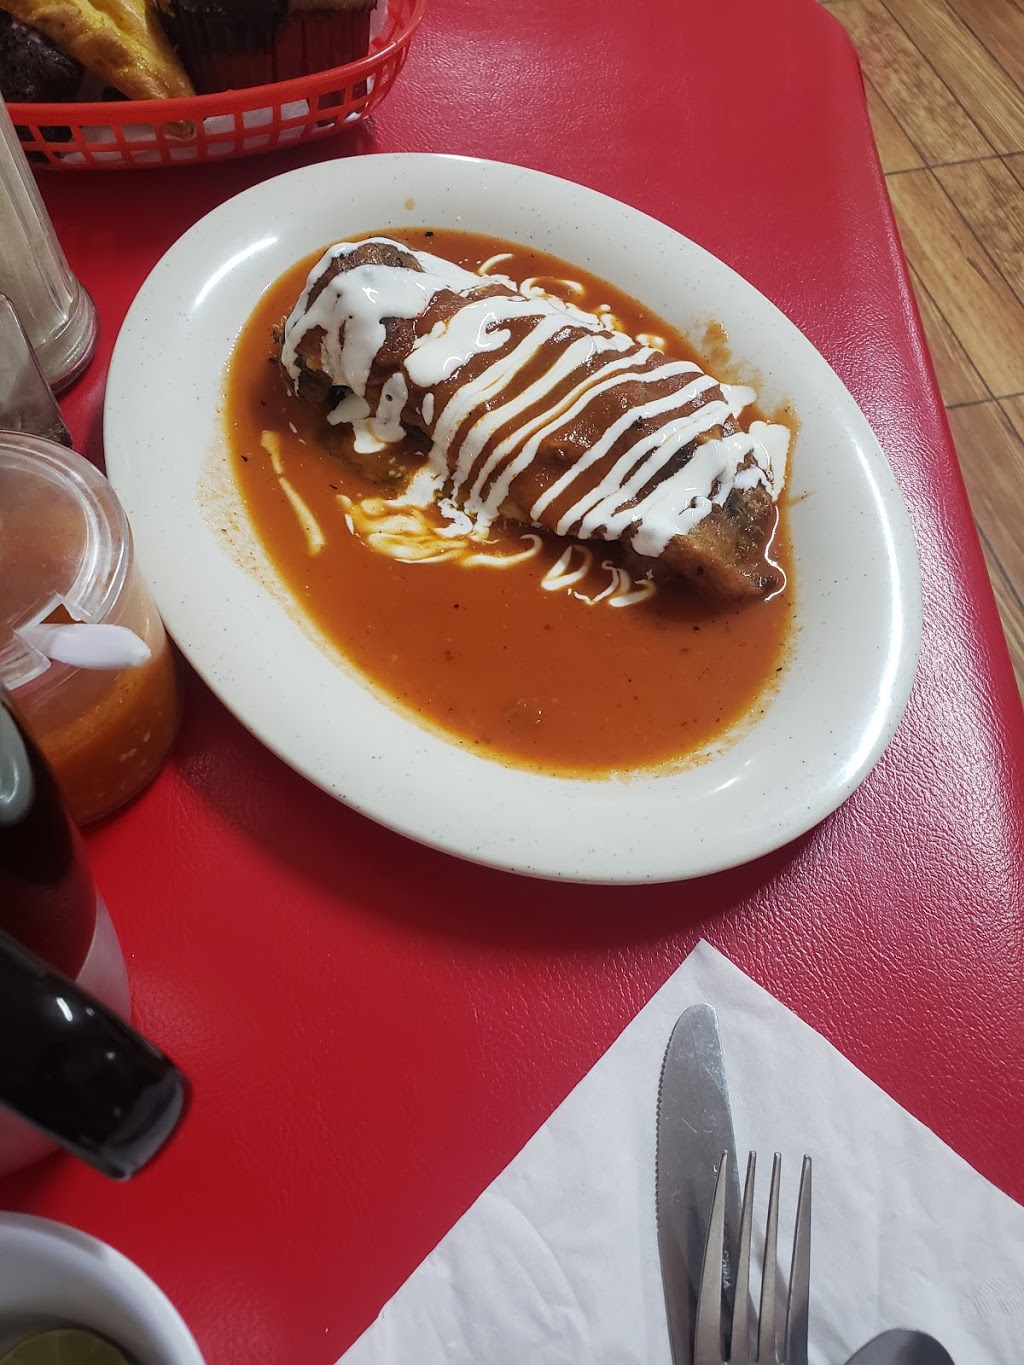 Beraca 2000 Restaurant & Café | Corredor Tijuana - Rosarito 2000 Km. 20 Rumbo a Popótla, Corredor Tijuana - Rosarito 2000, 22163 Baja California, Mexico | Phone: 664 726 8580